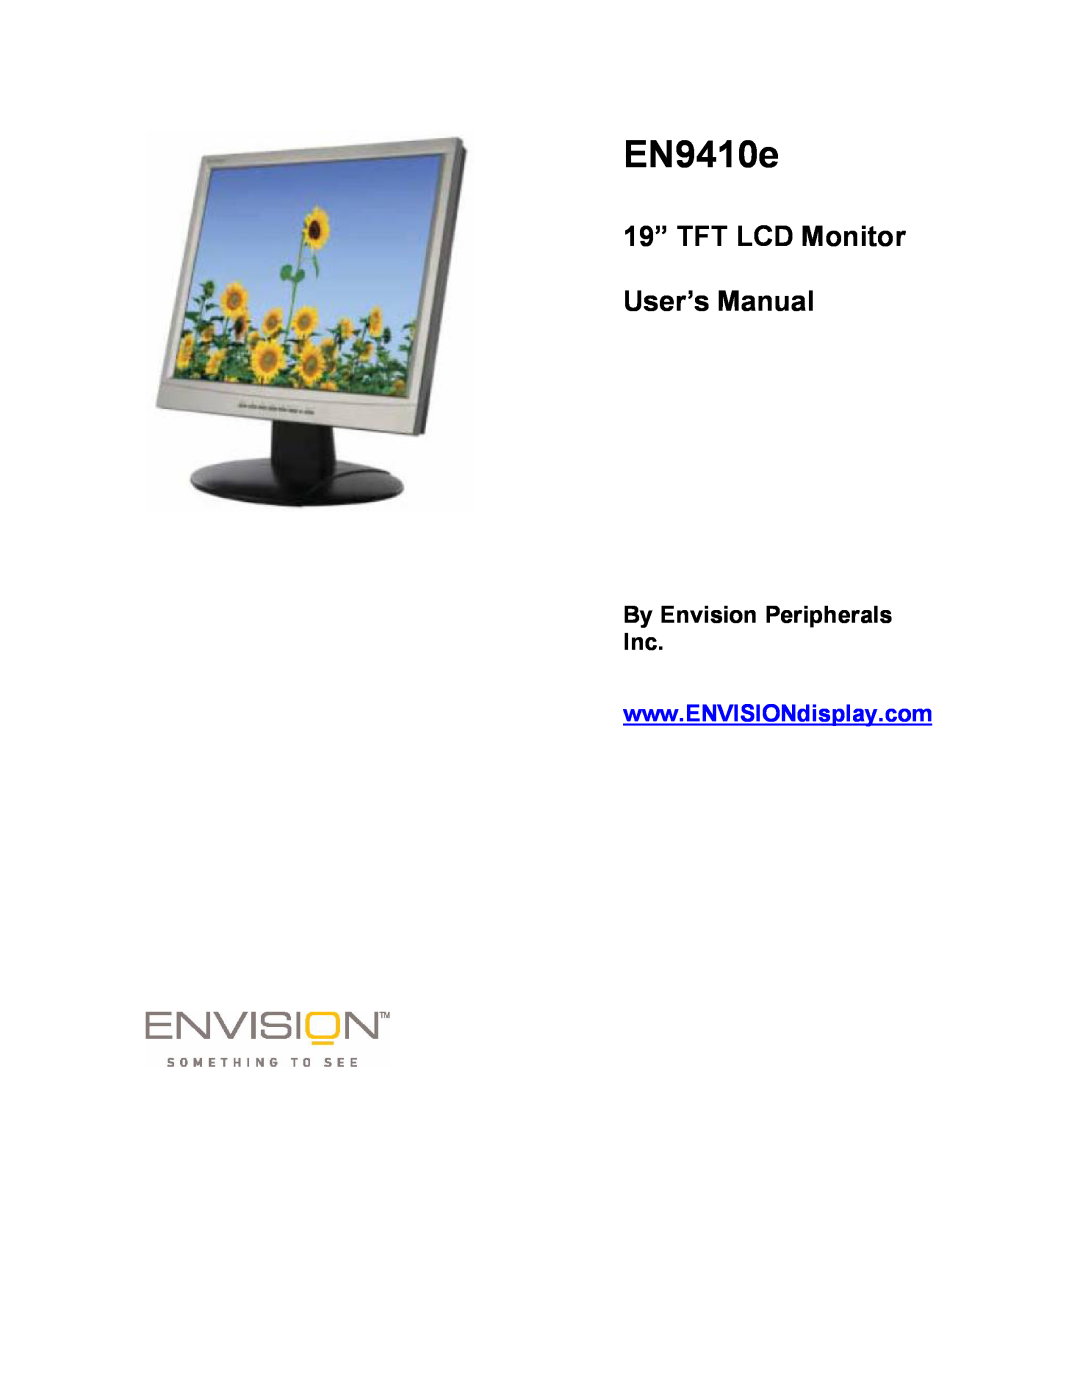 Envision Peripherals EN9410e user manual TFT LCD Monitor Users Manual 